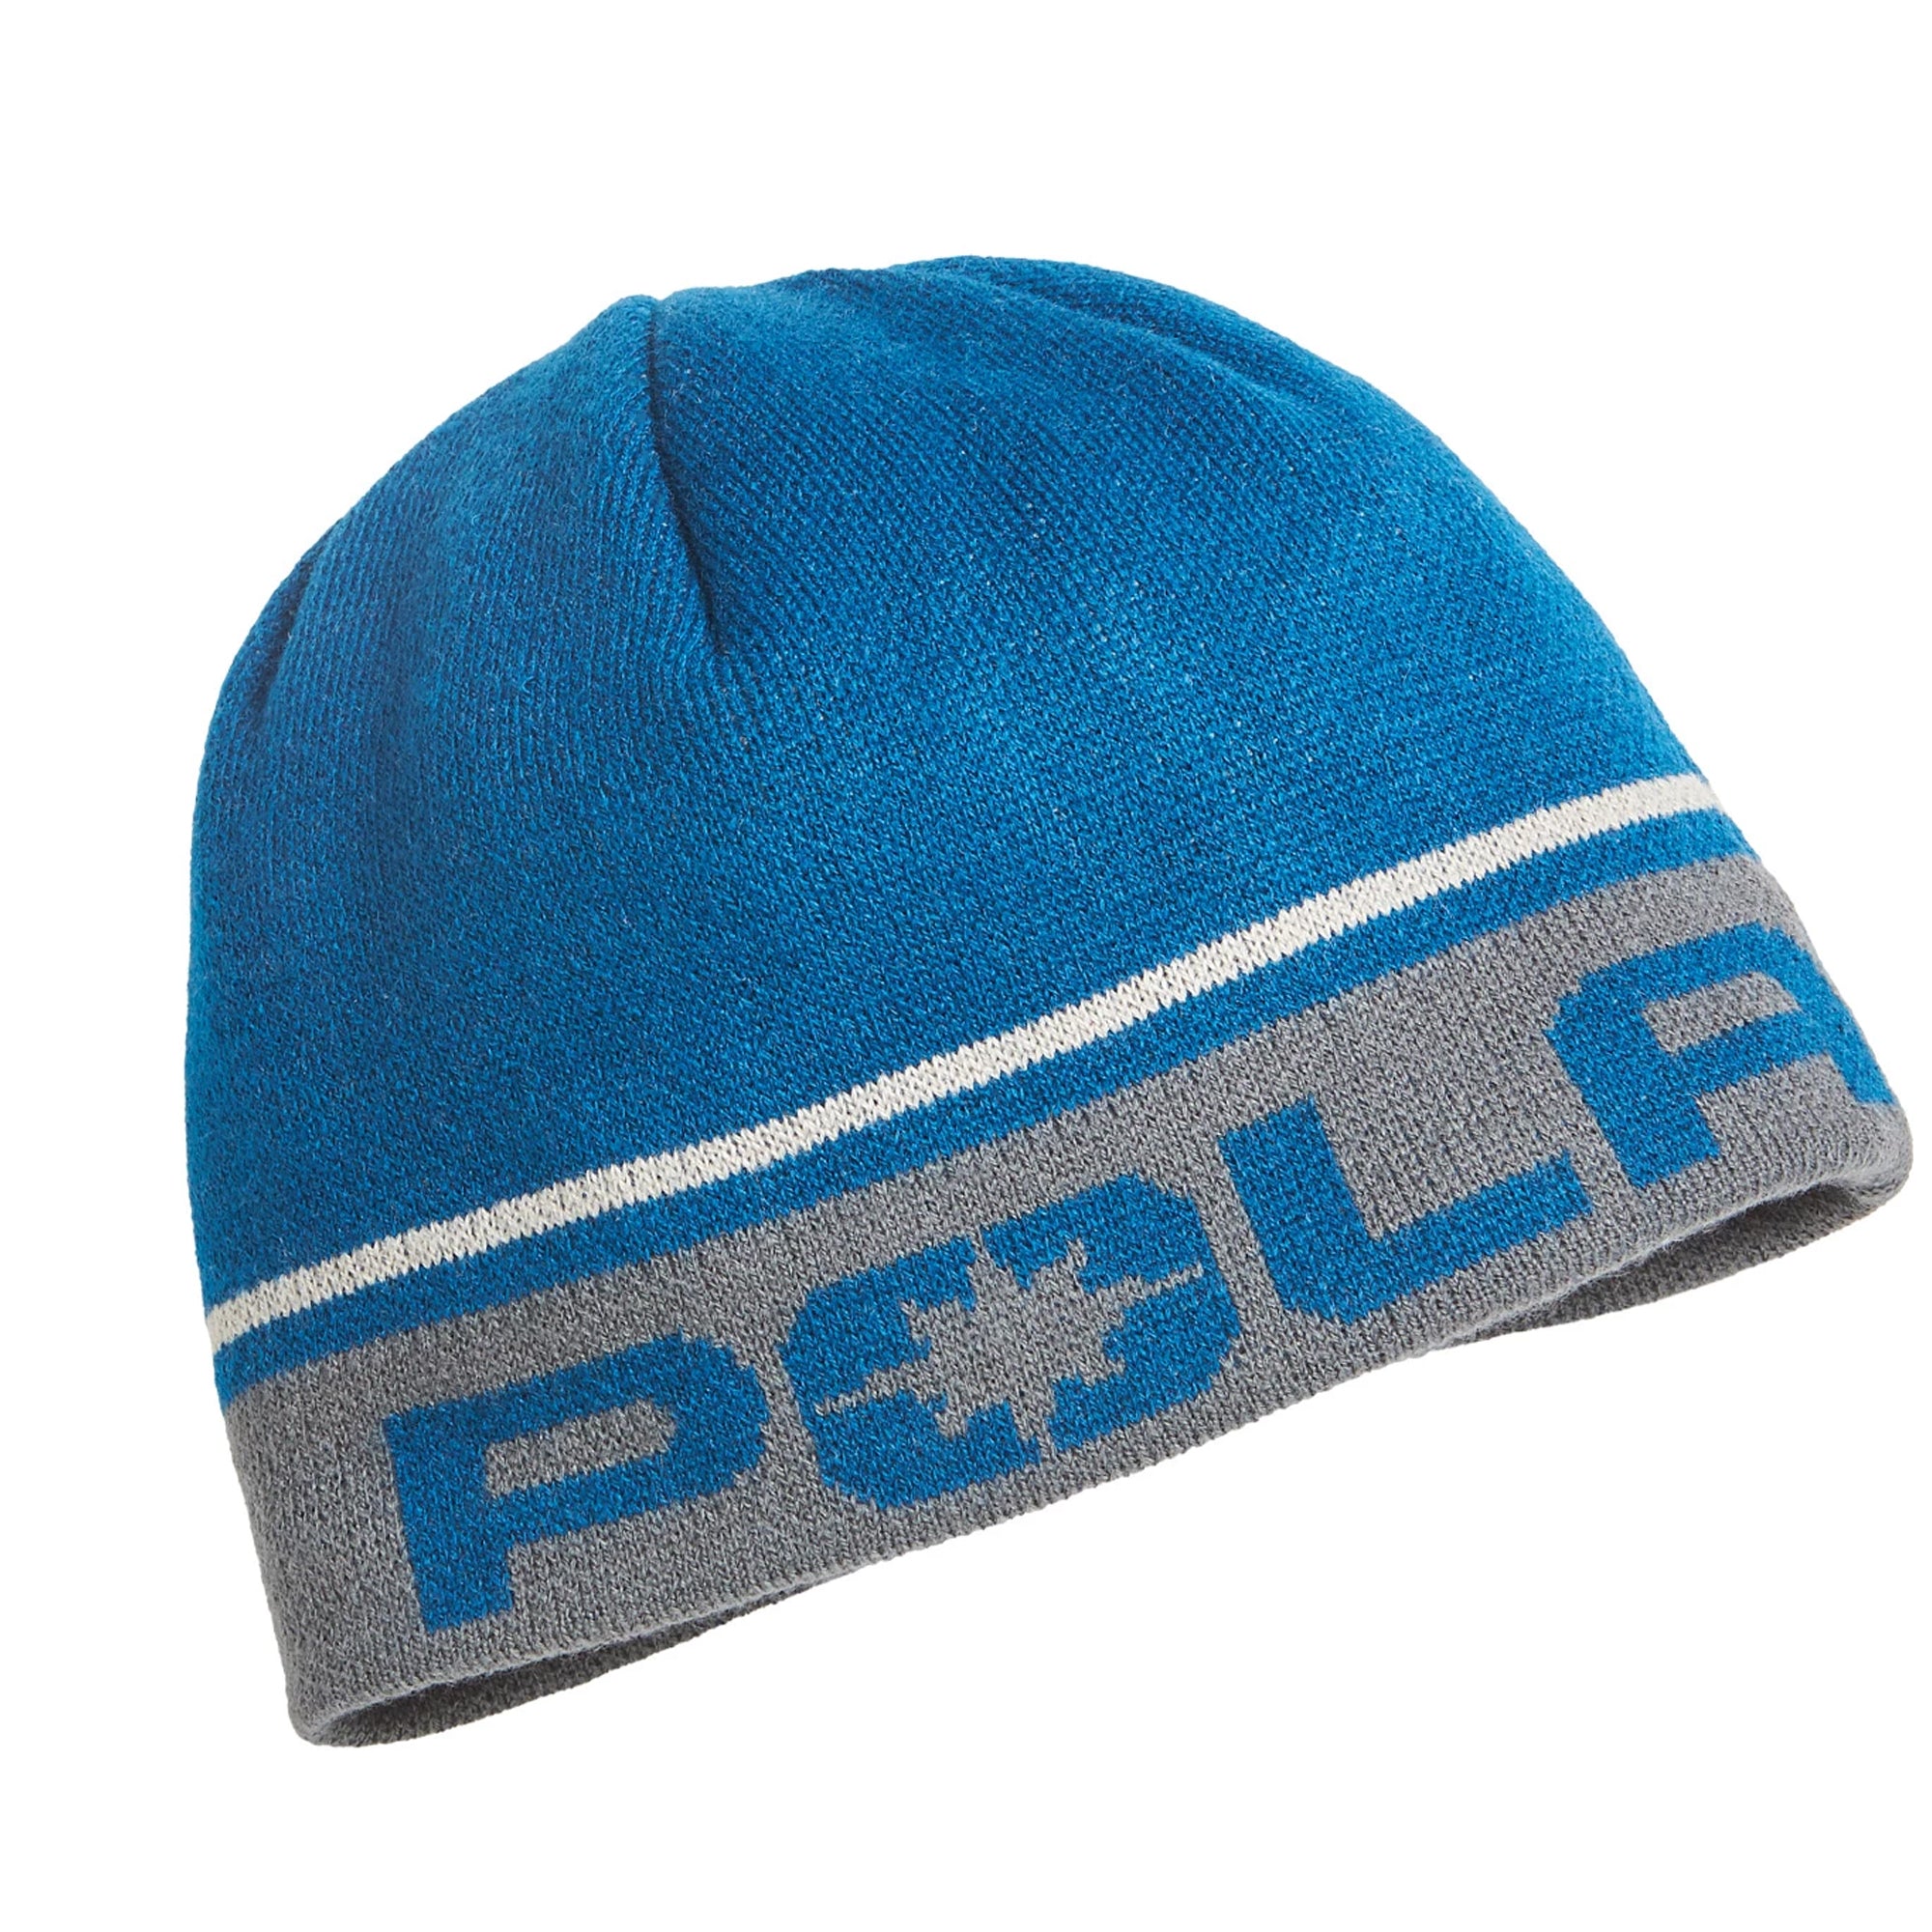 Polaris  Mens Northstar Beanie Cozy Warm Winter Stretch Acrylic Fabric Hat - One Size